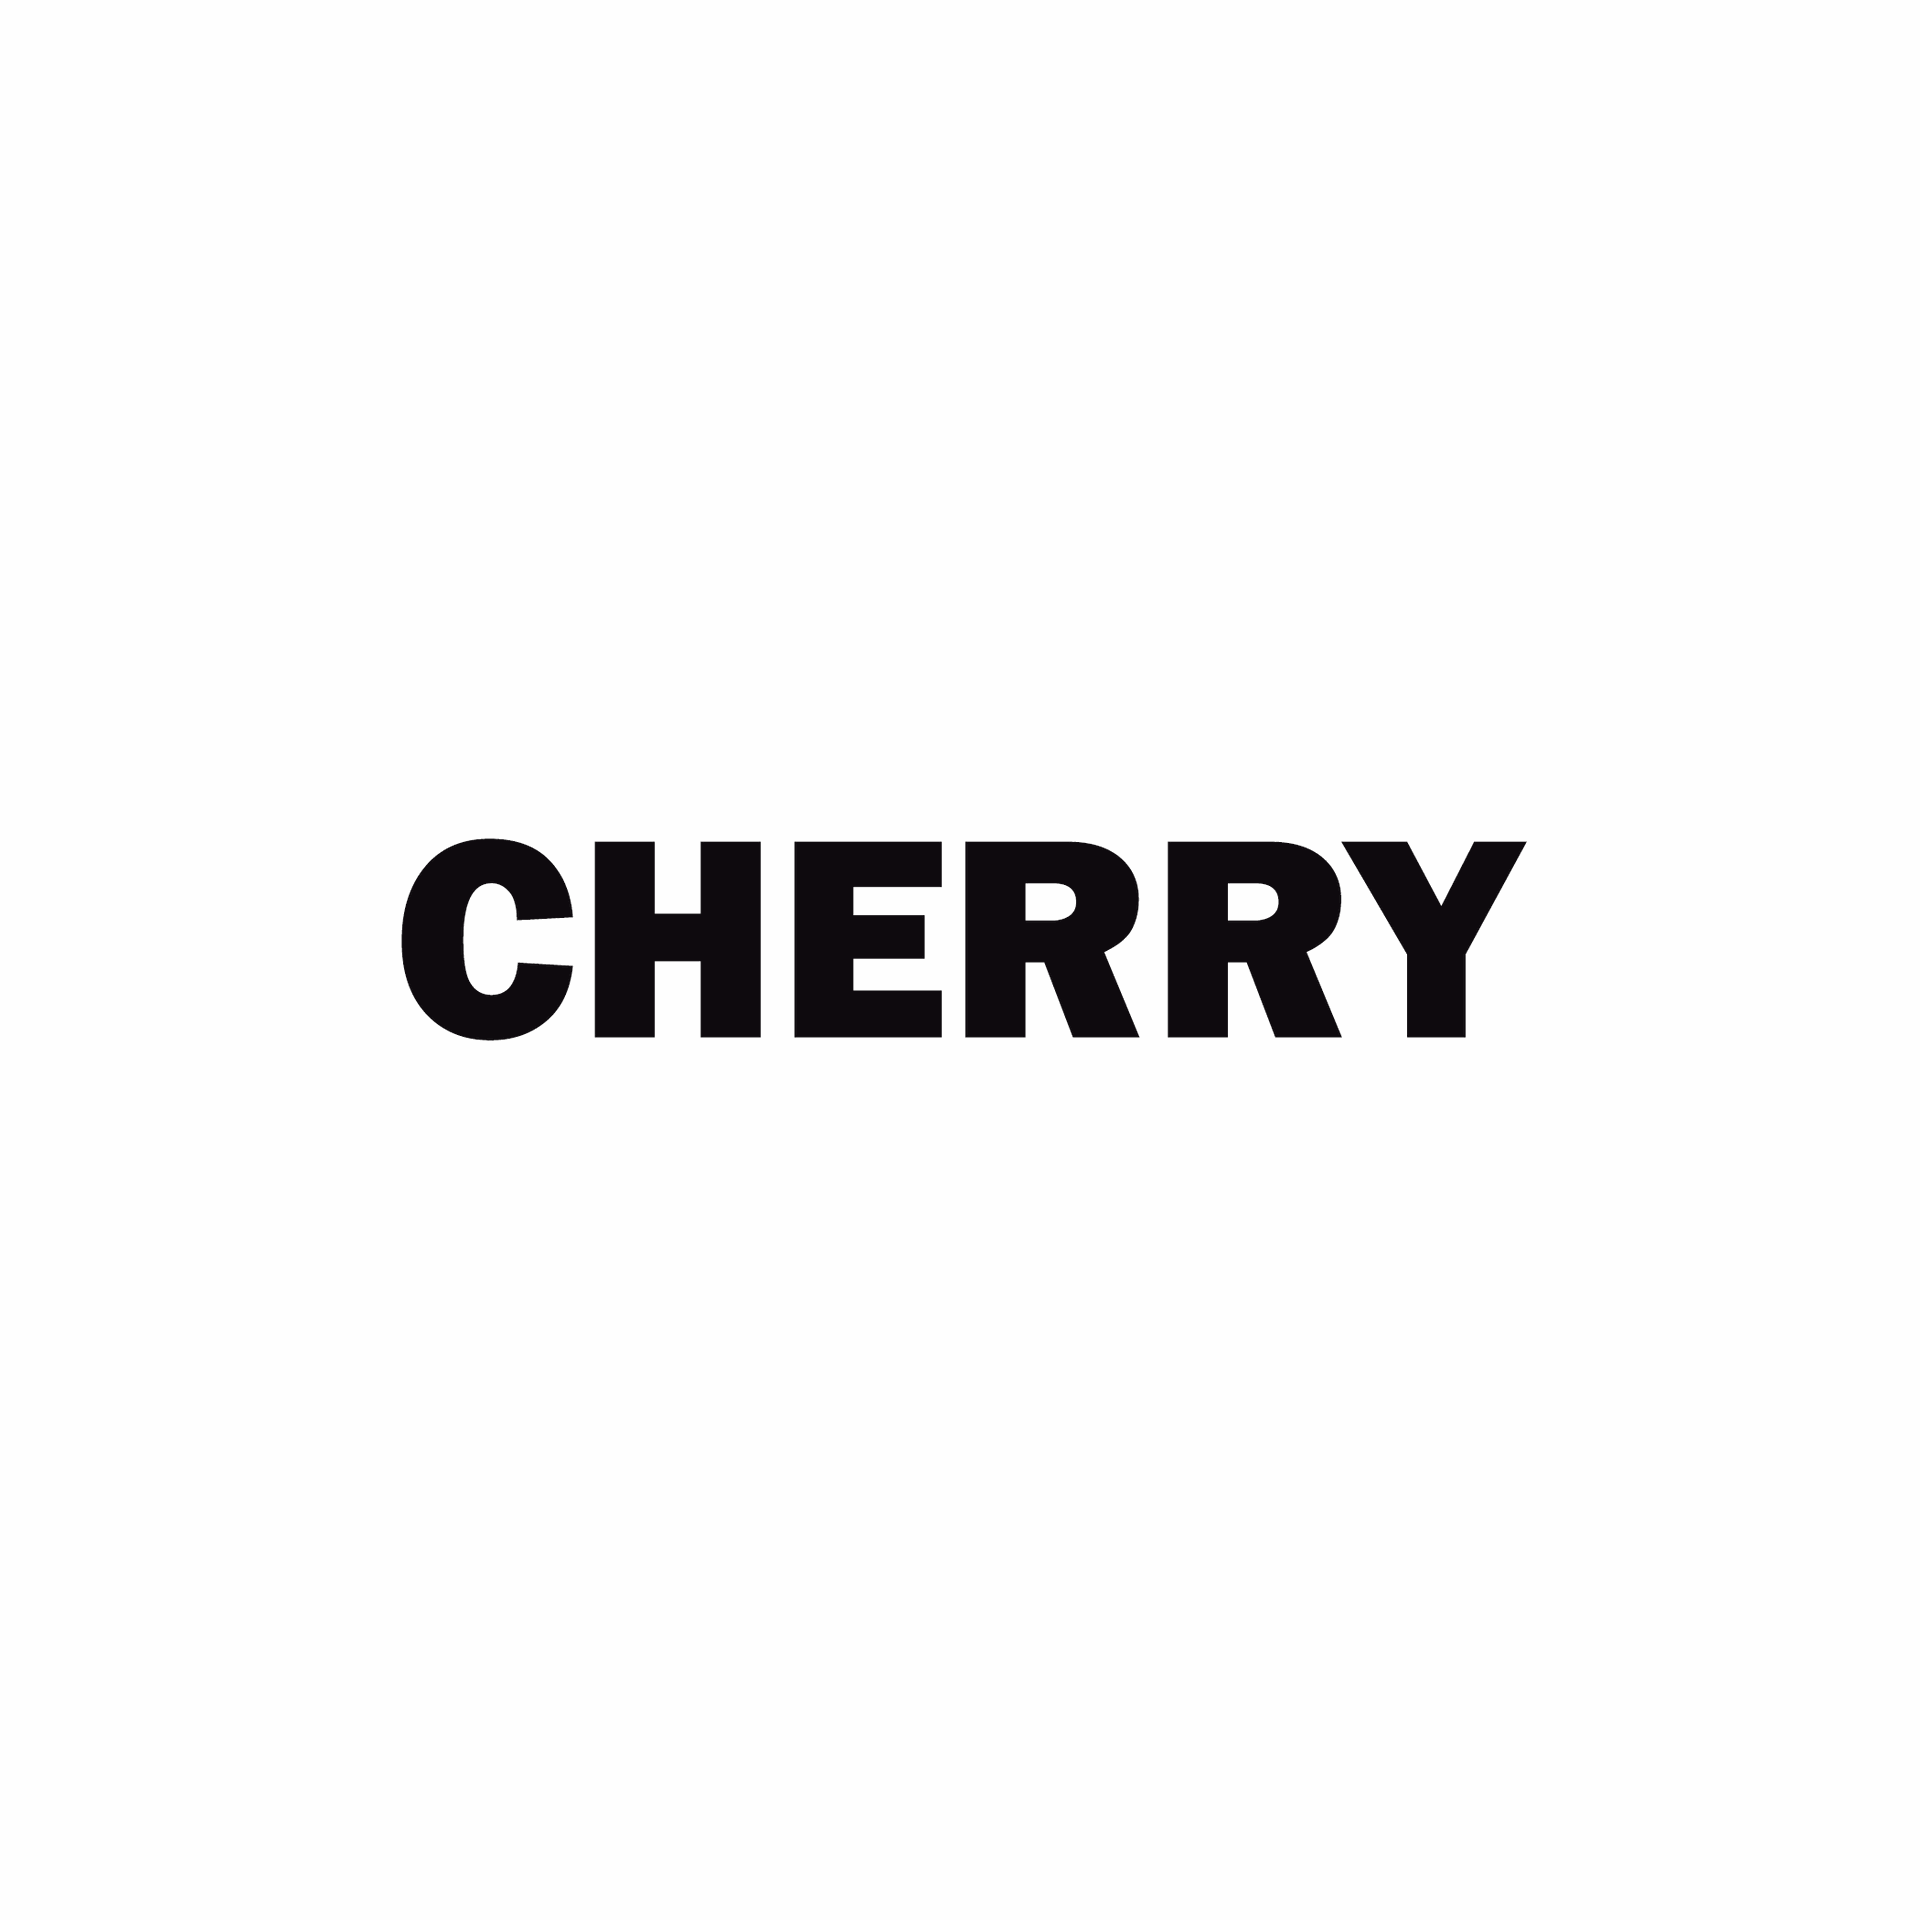 Product Brand: Cherry